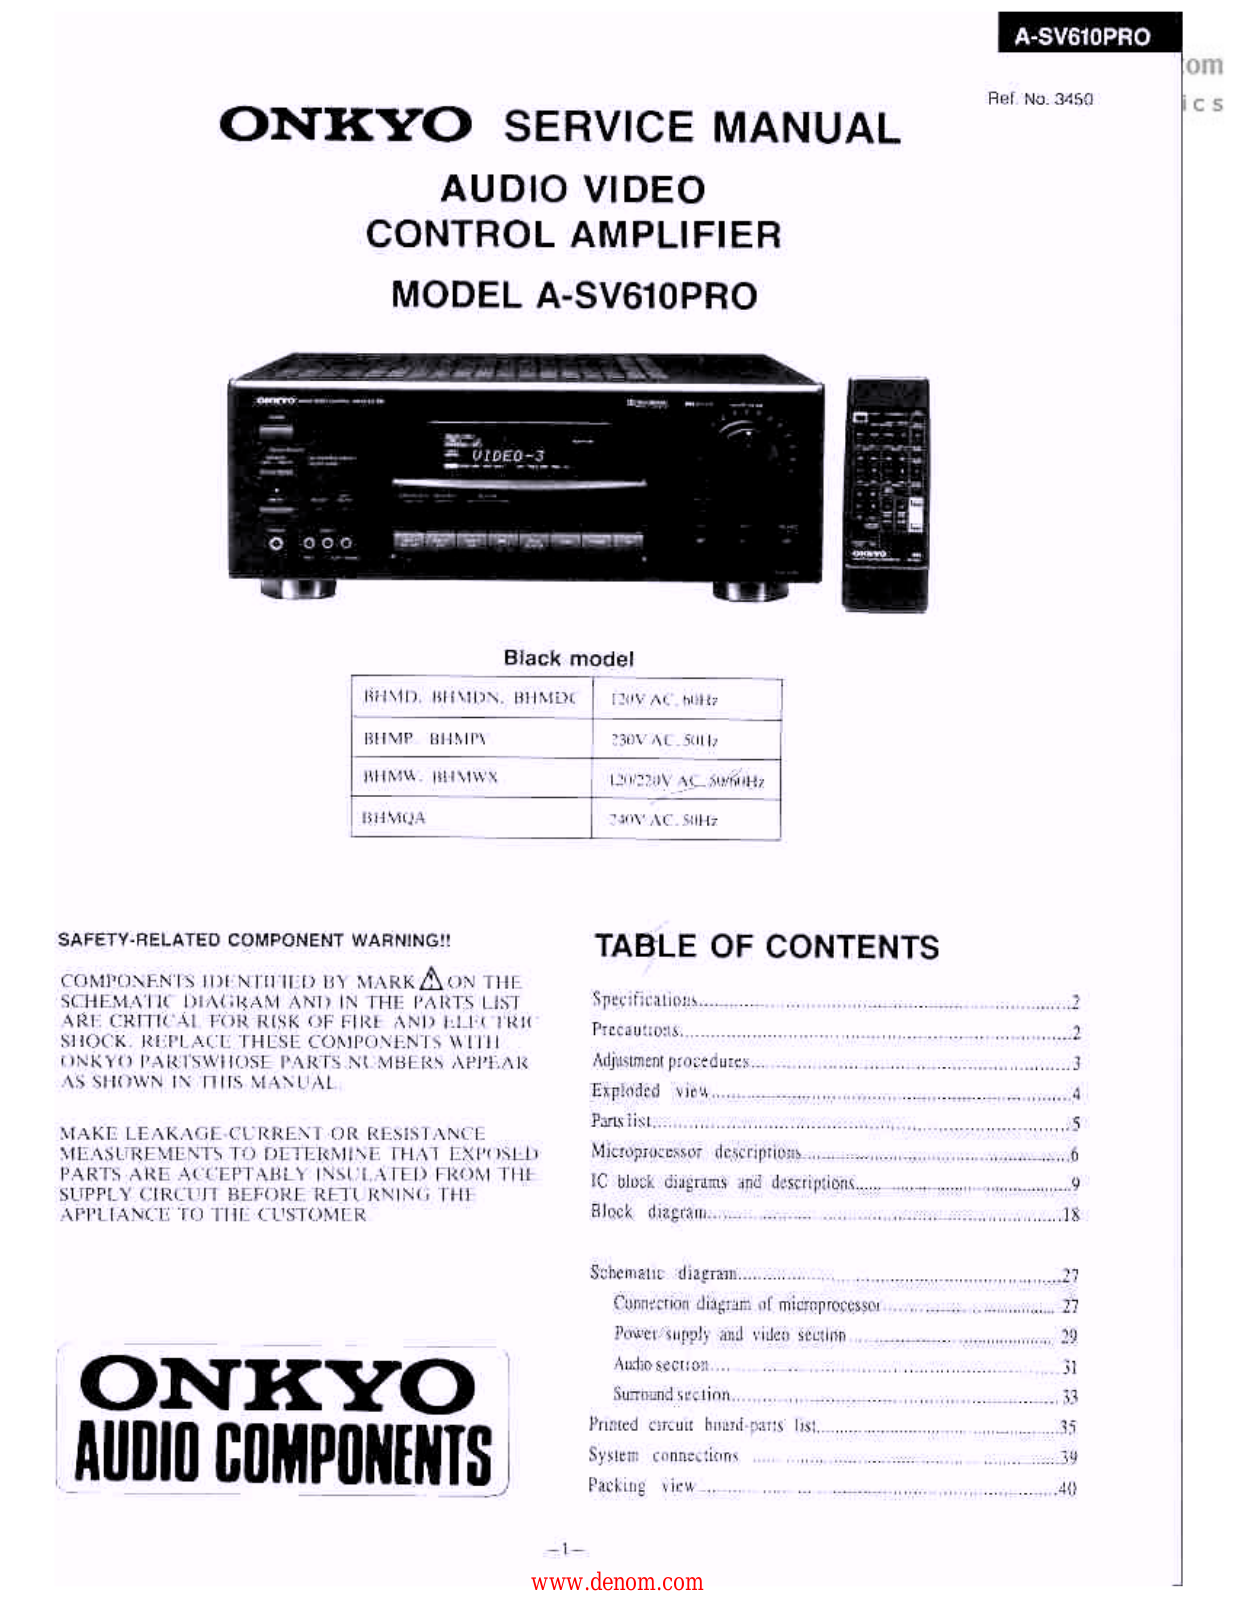 Onkyo ASV-610-PRO Service manual